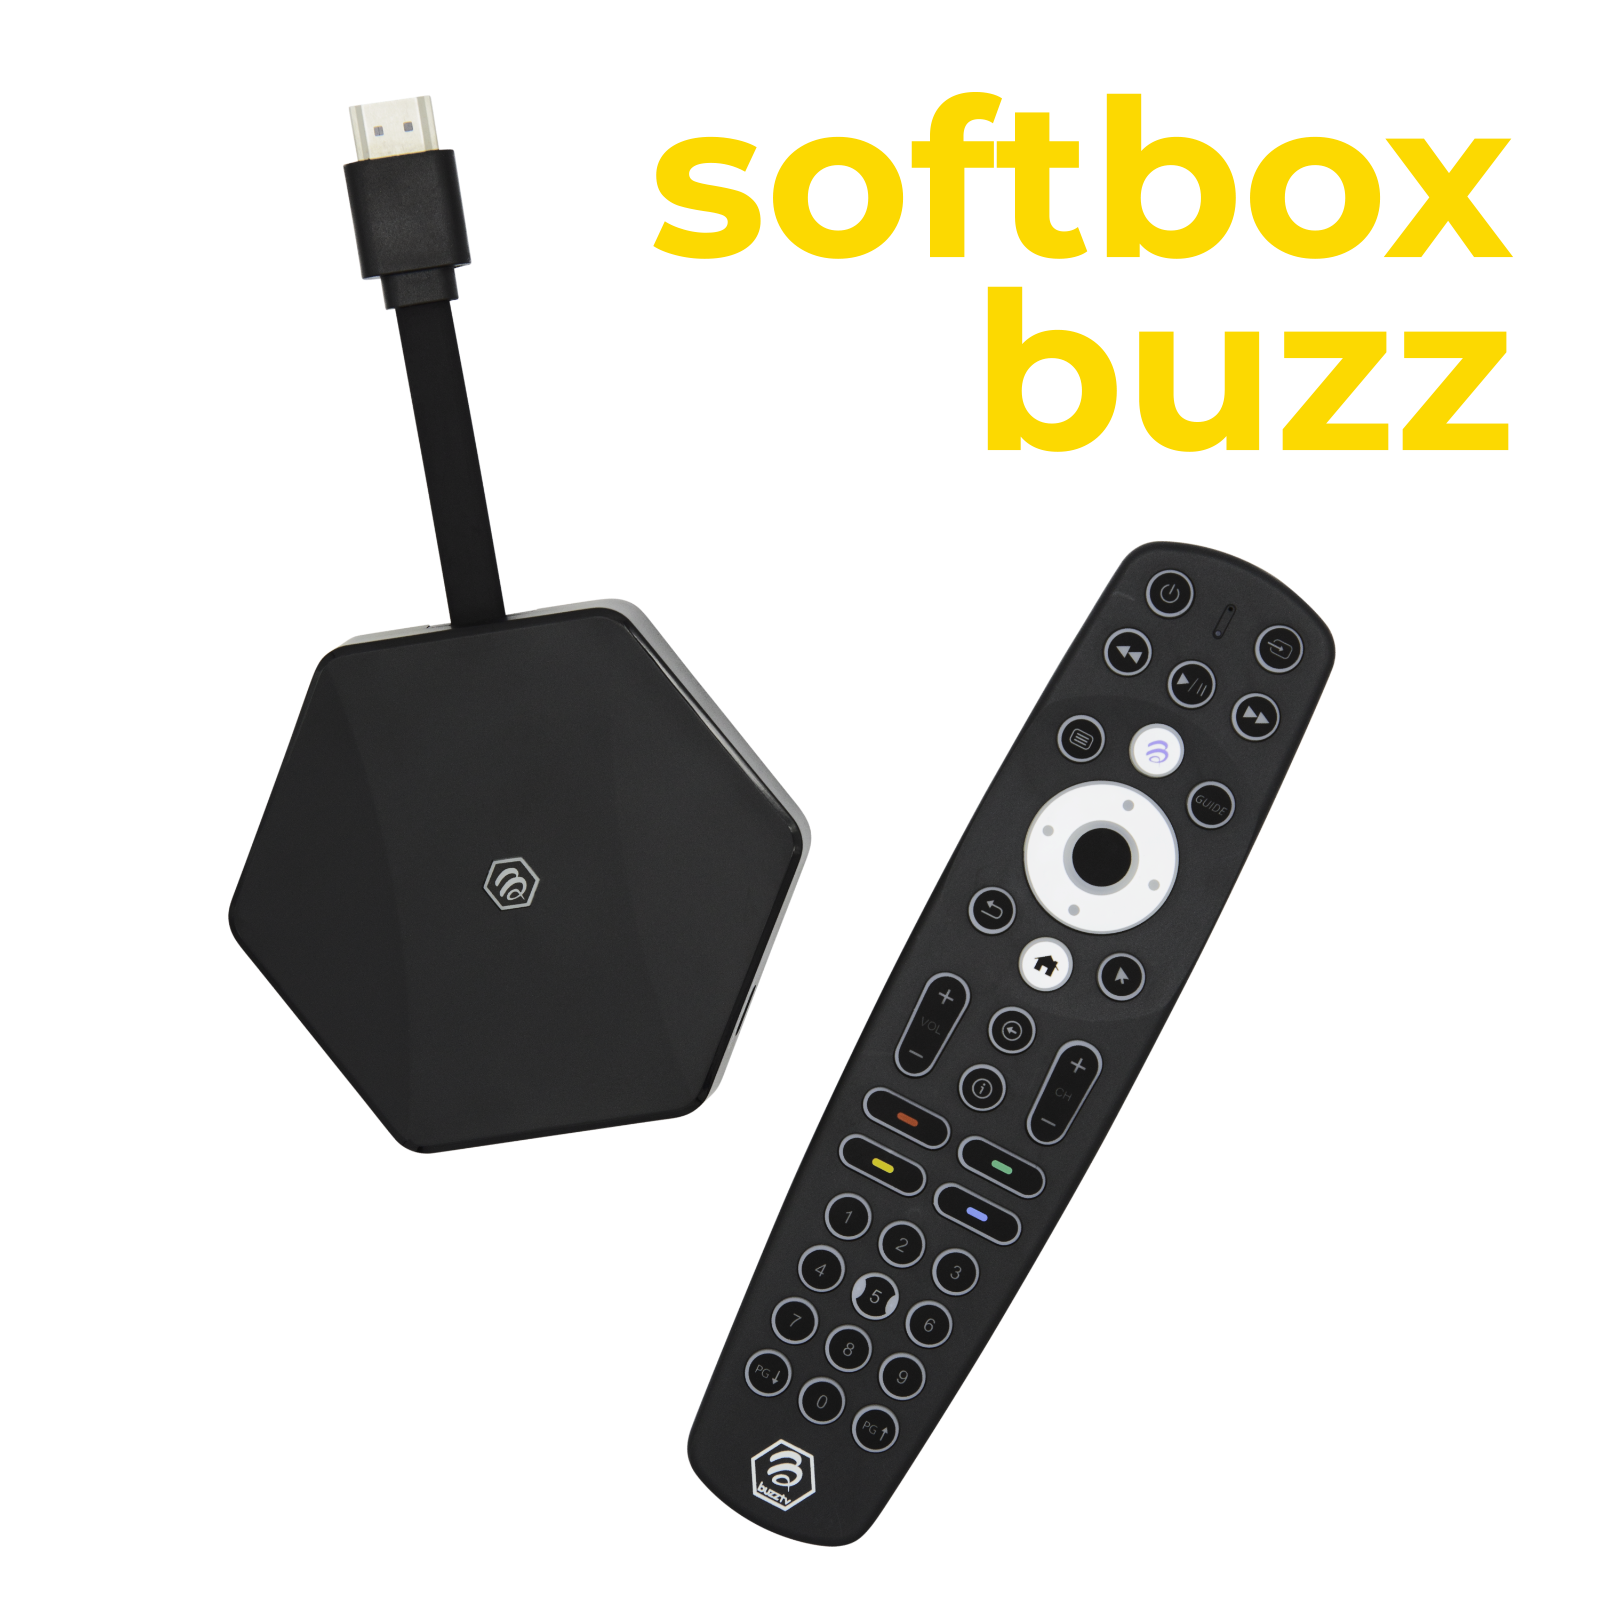 Softbox Buzz